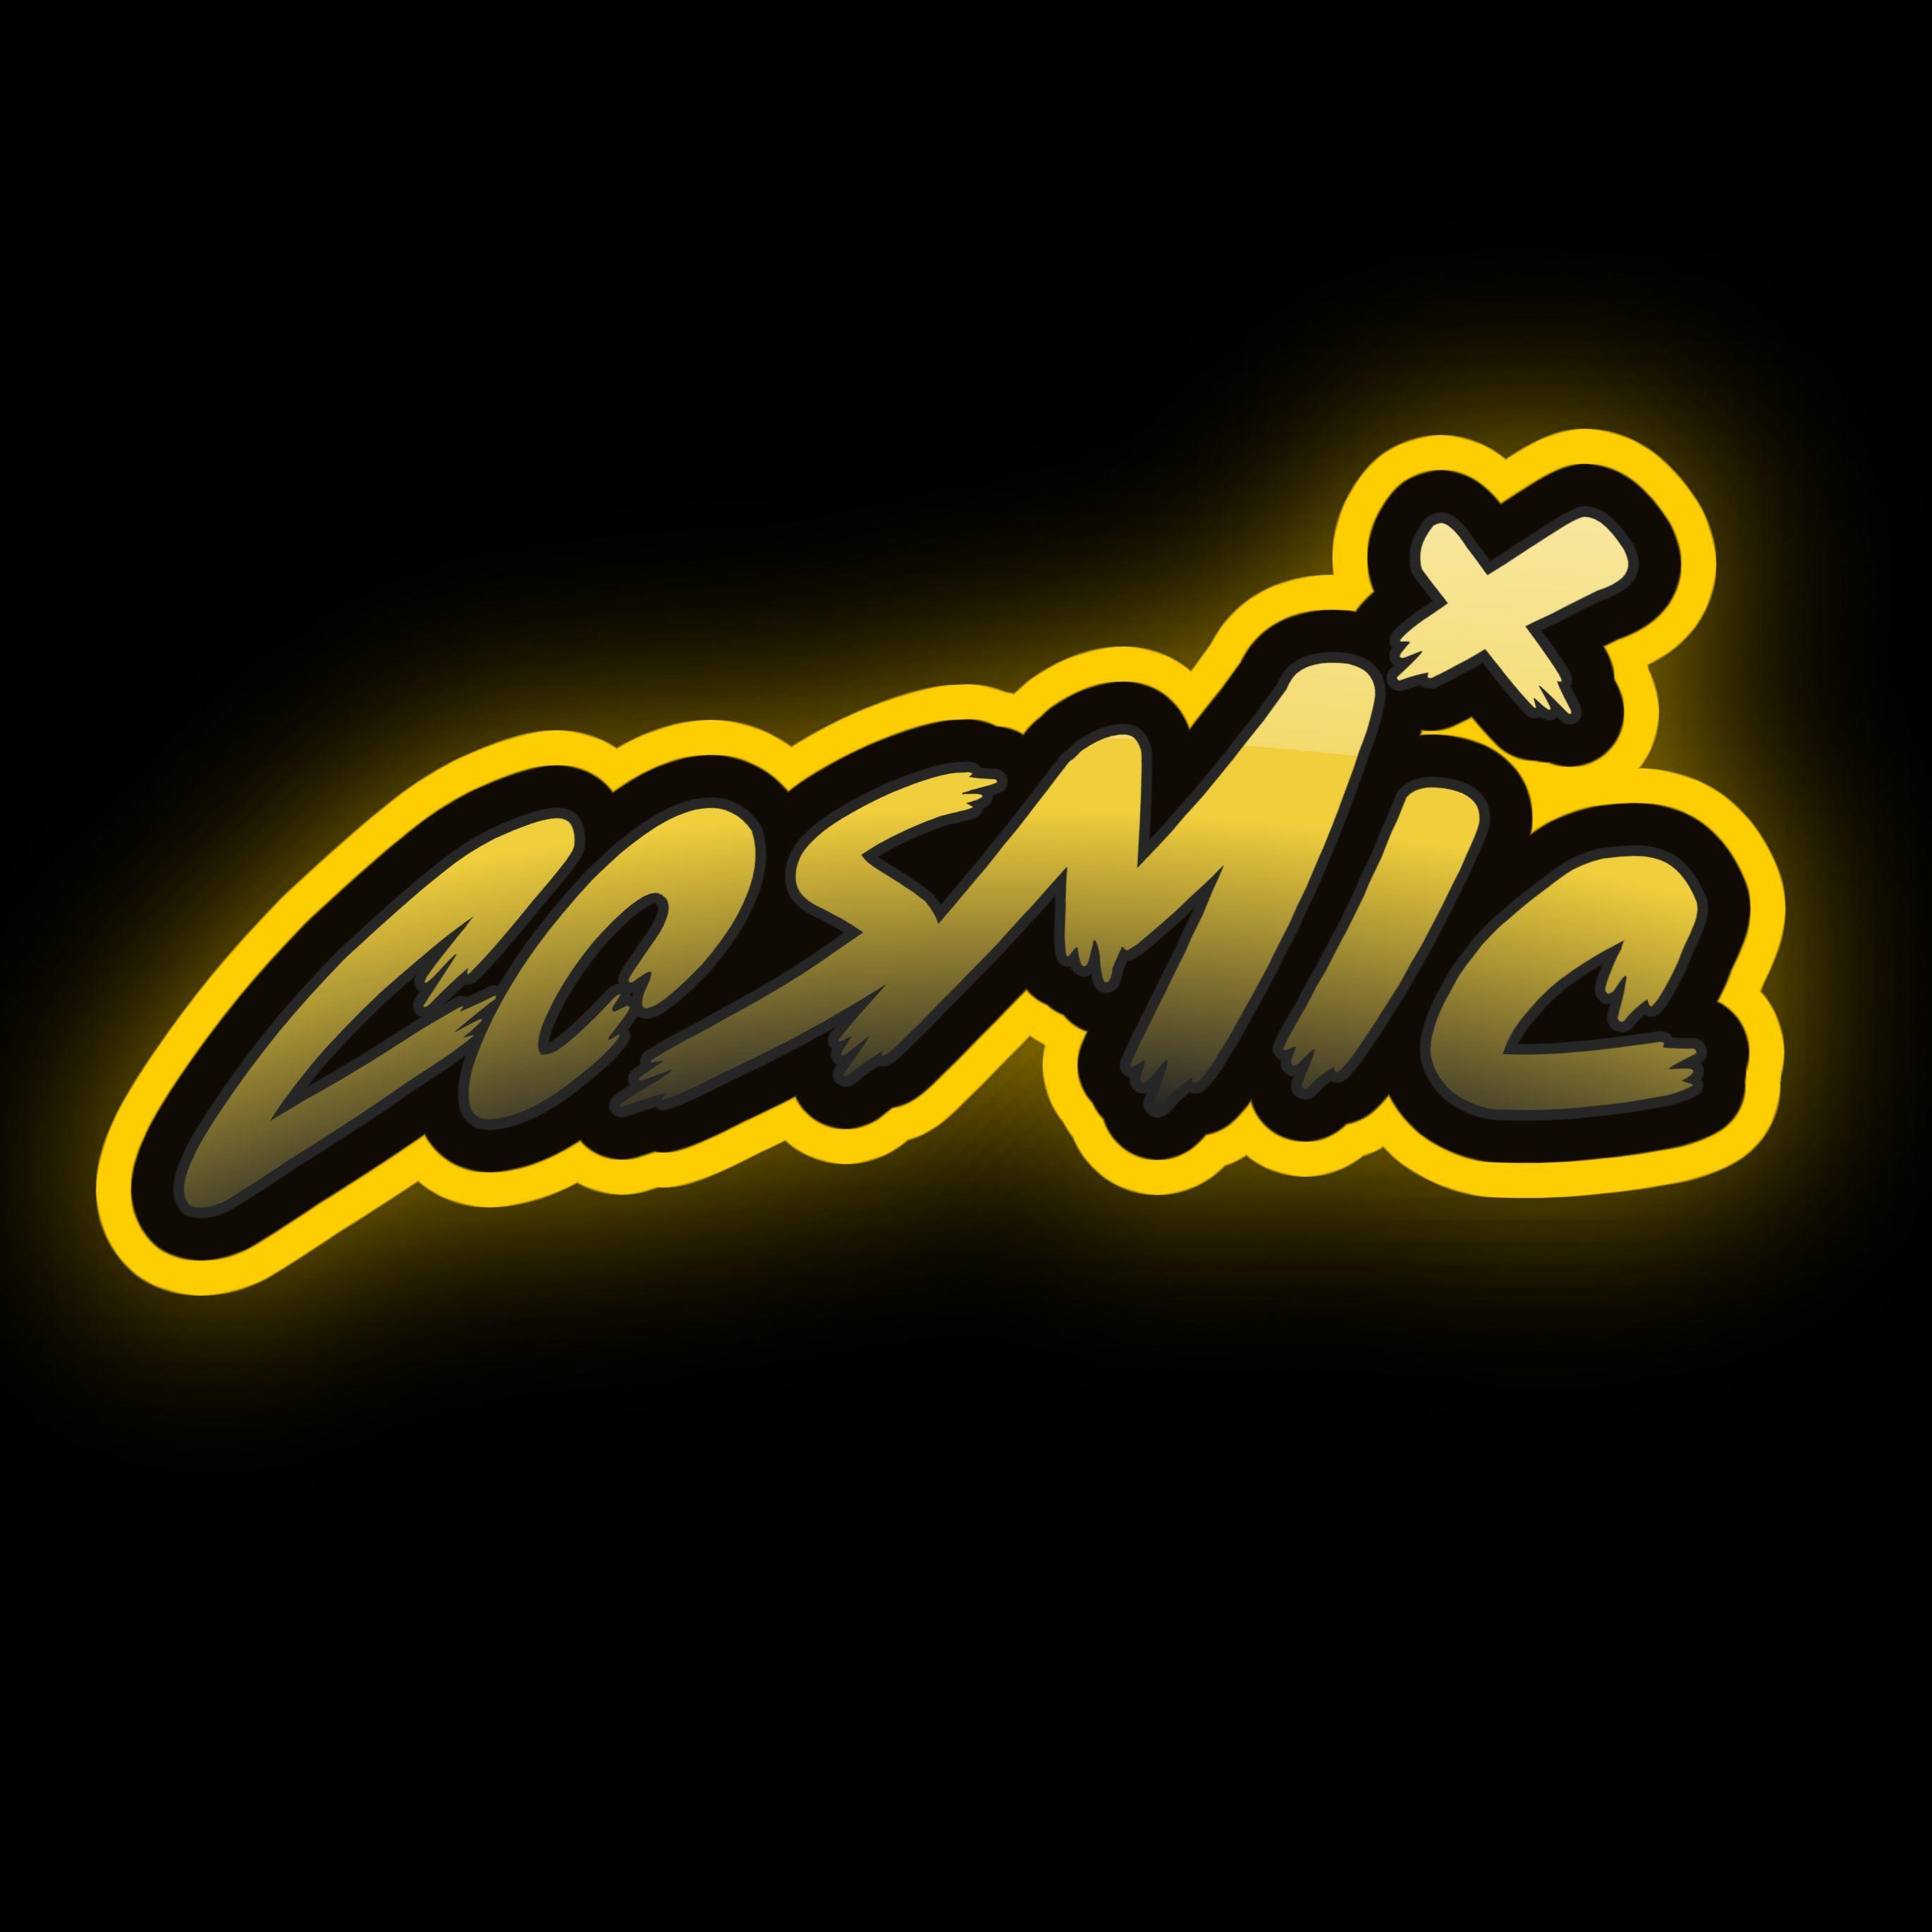 Player cossmic avatar